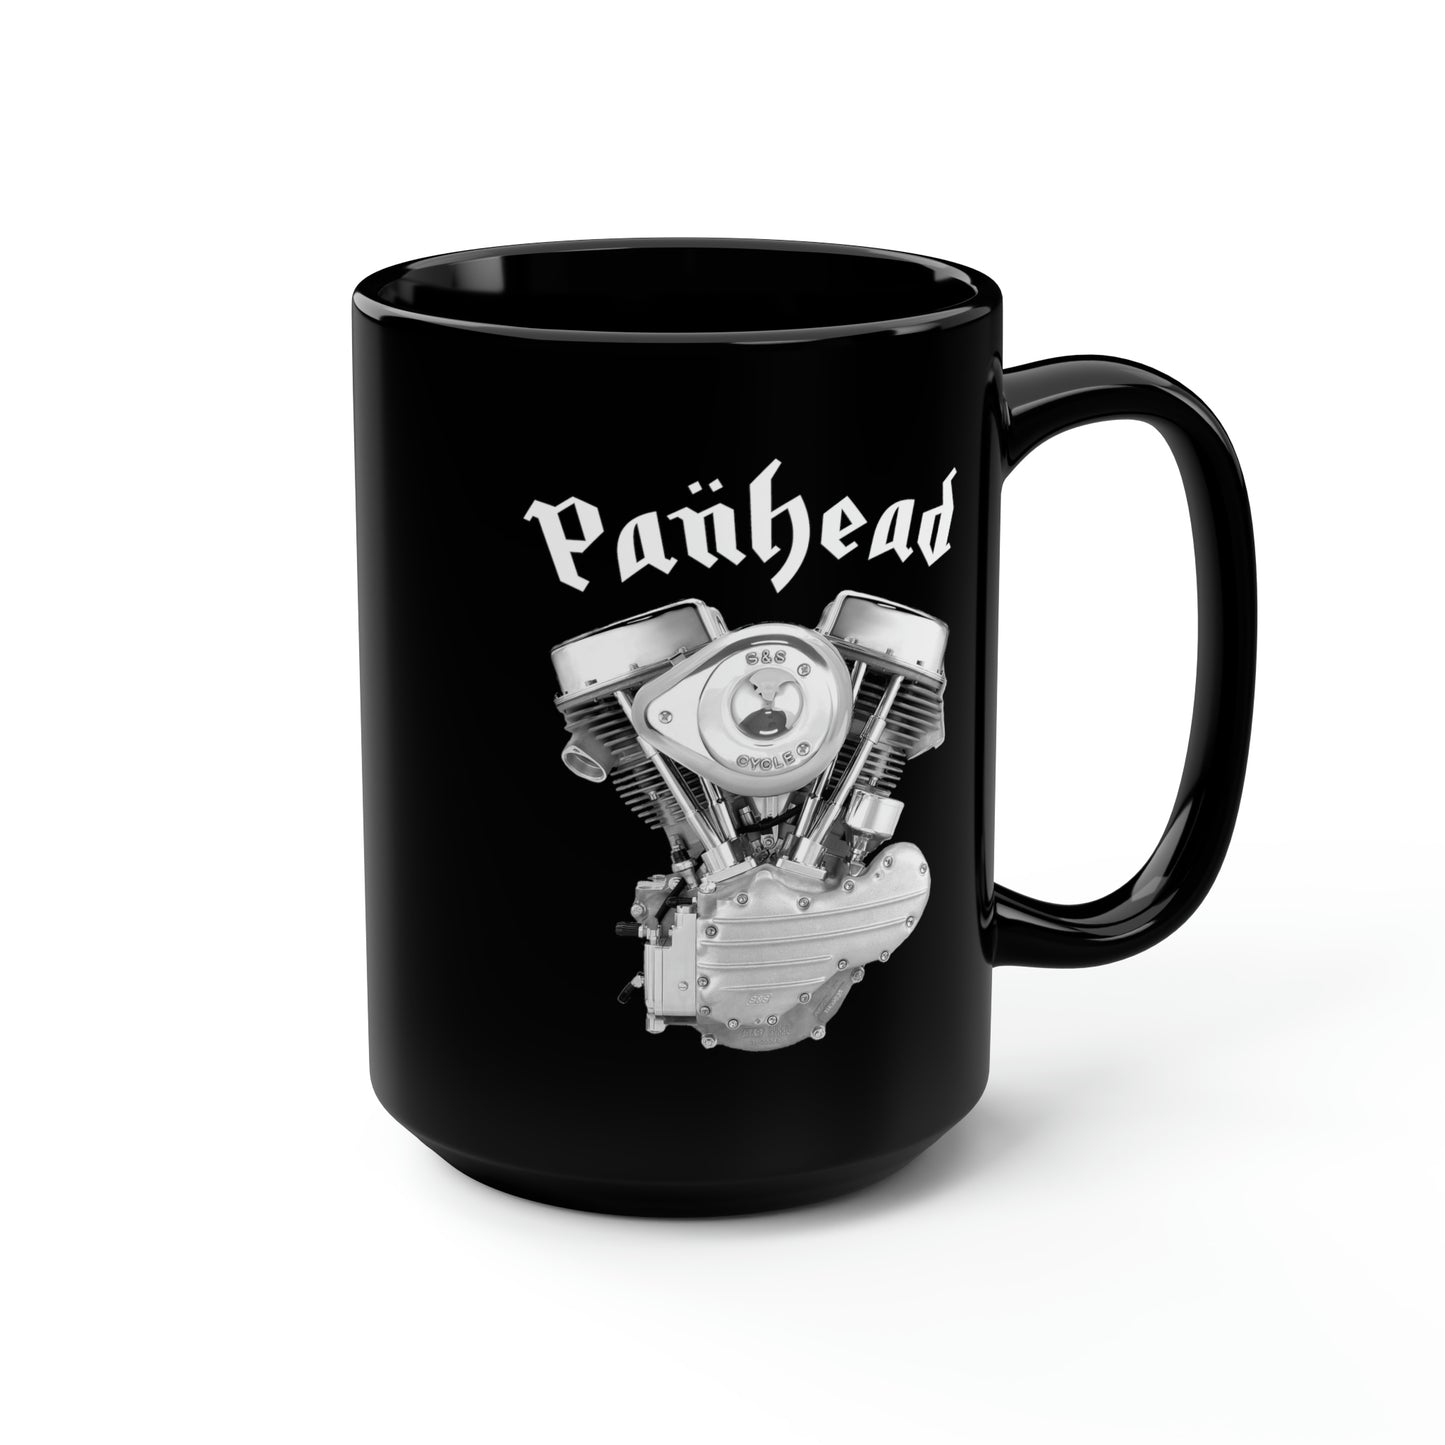 PANHEAD 1 Black Mug, 15oz